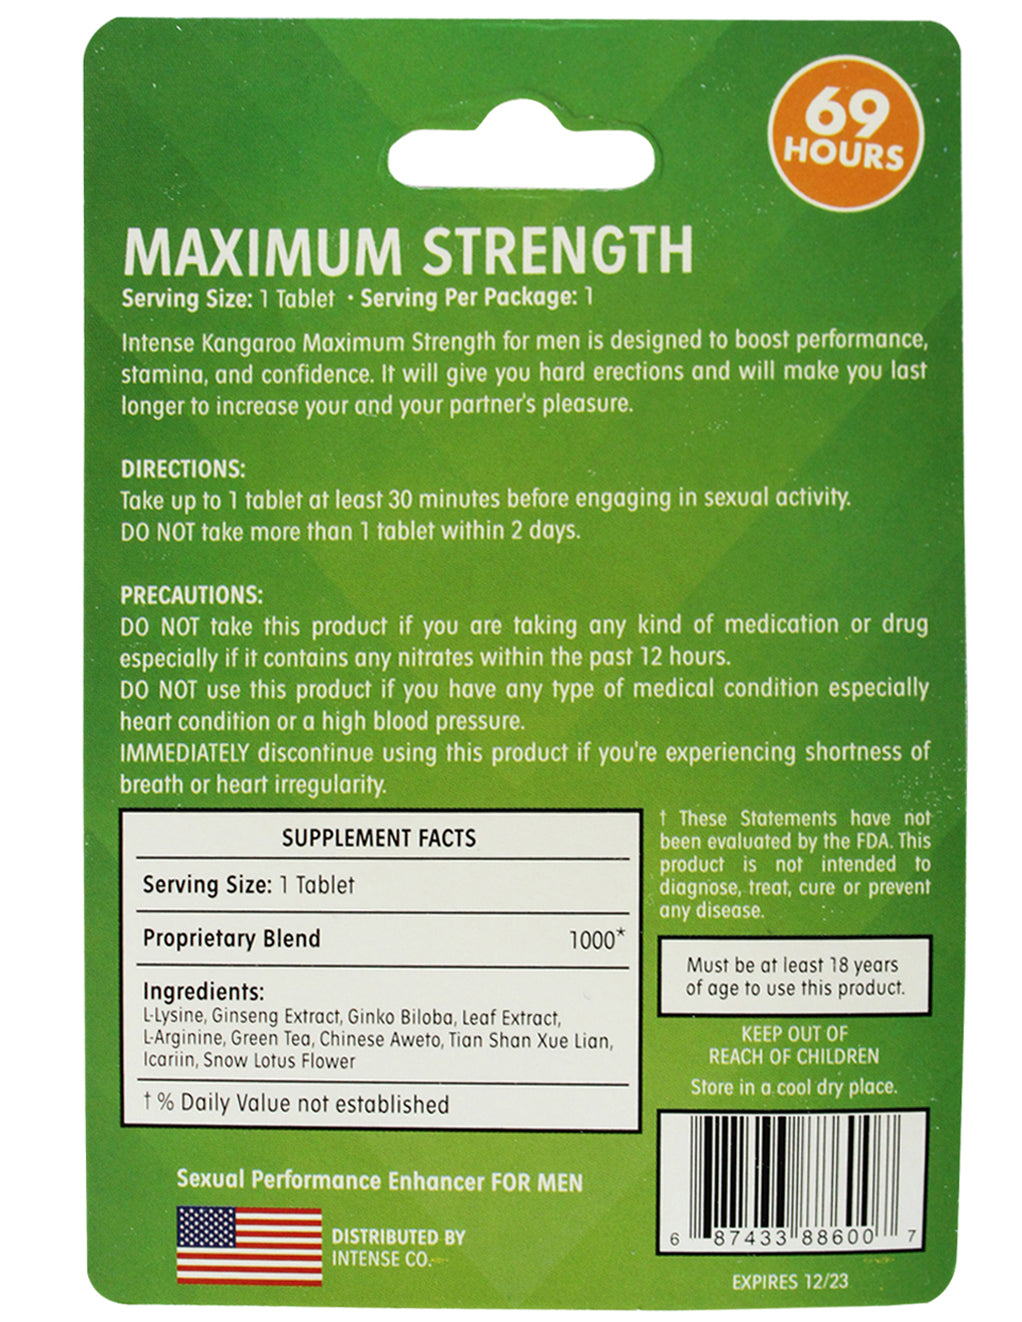 Kangaroo Green Max Strength- back